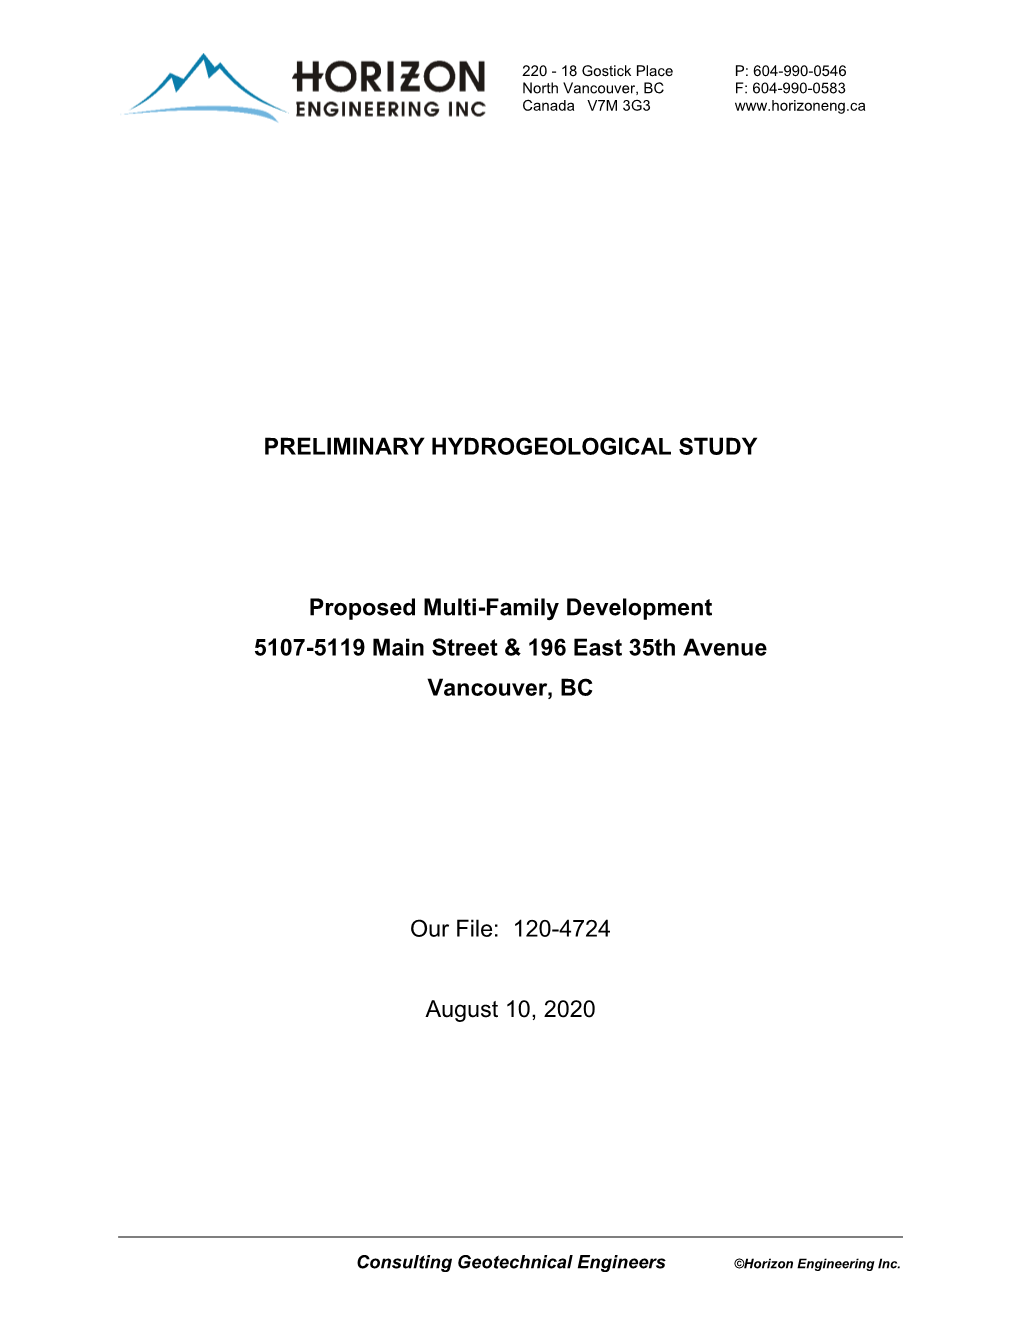 5107-5119 Main St & 196 E 35Th Preliminary Hydrogeological Report